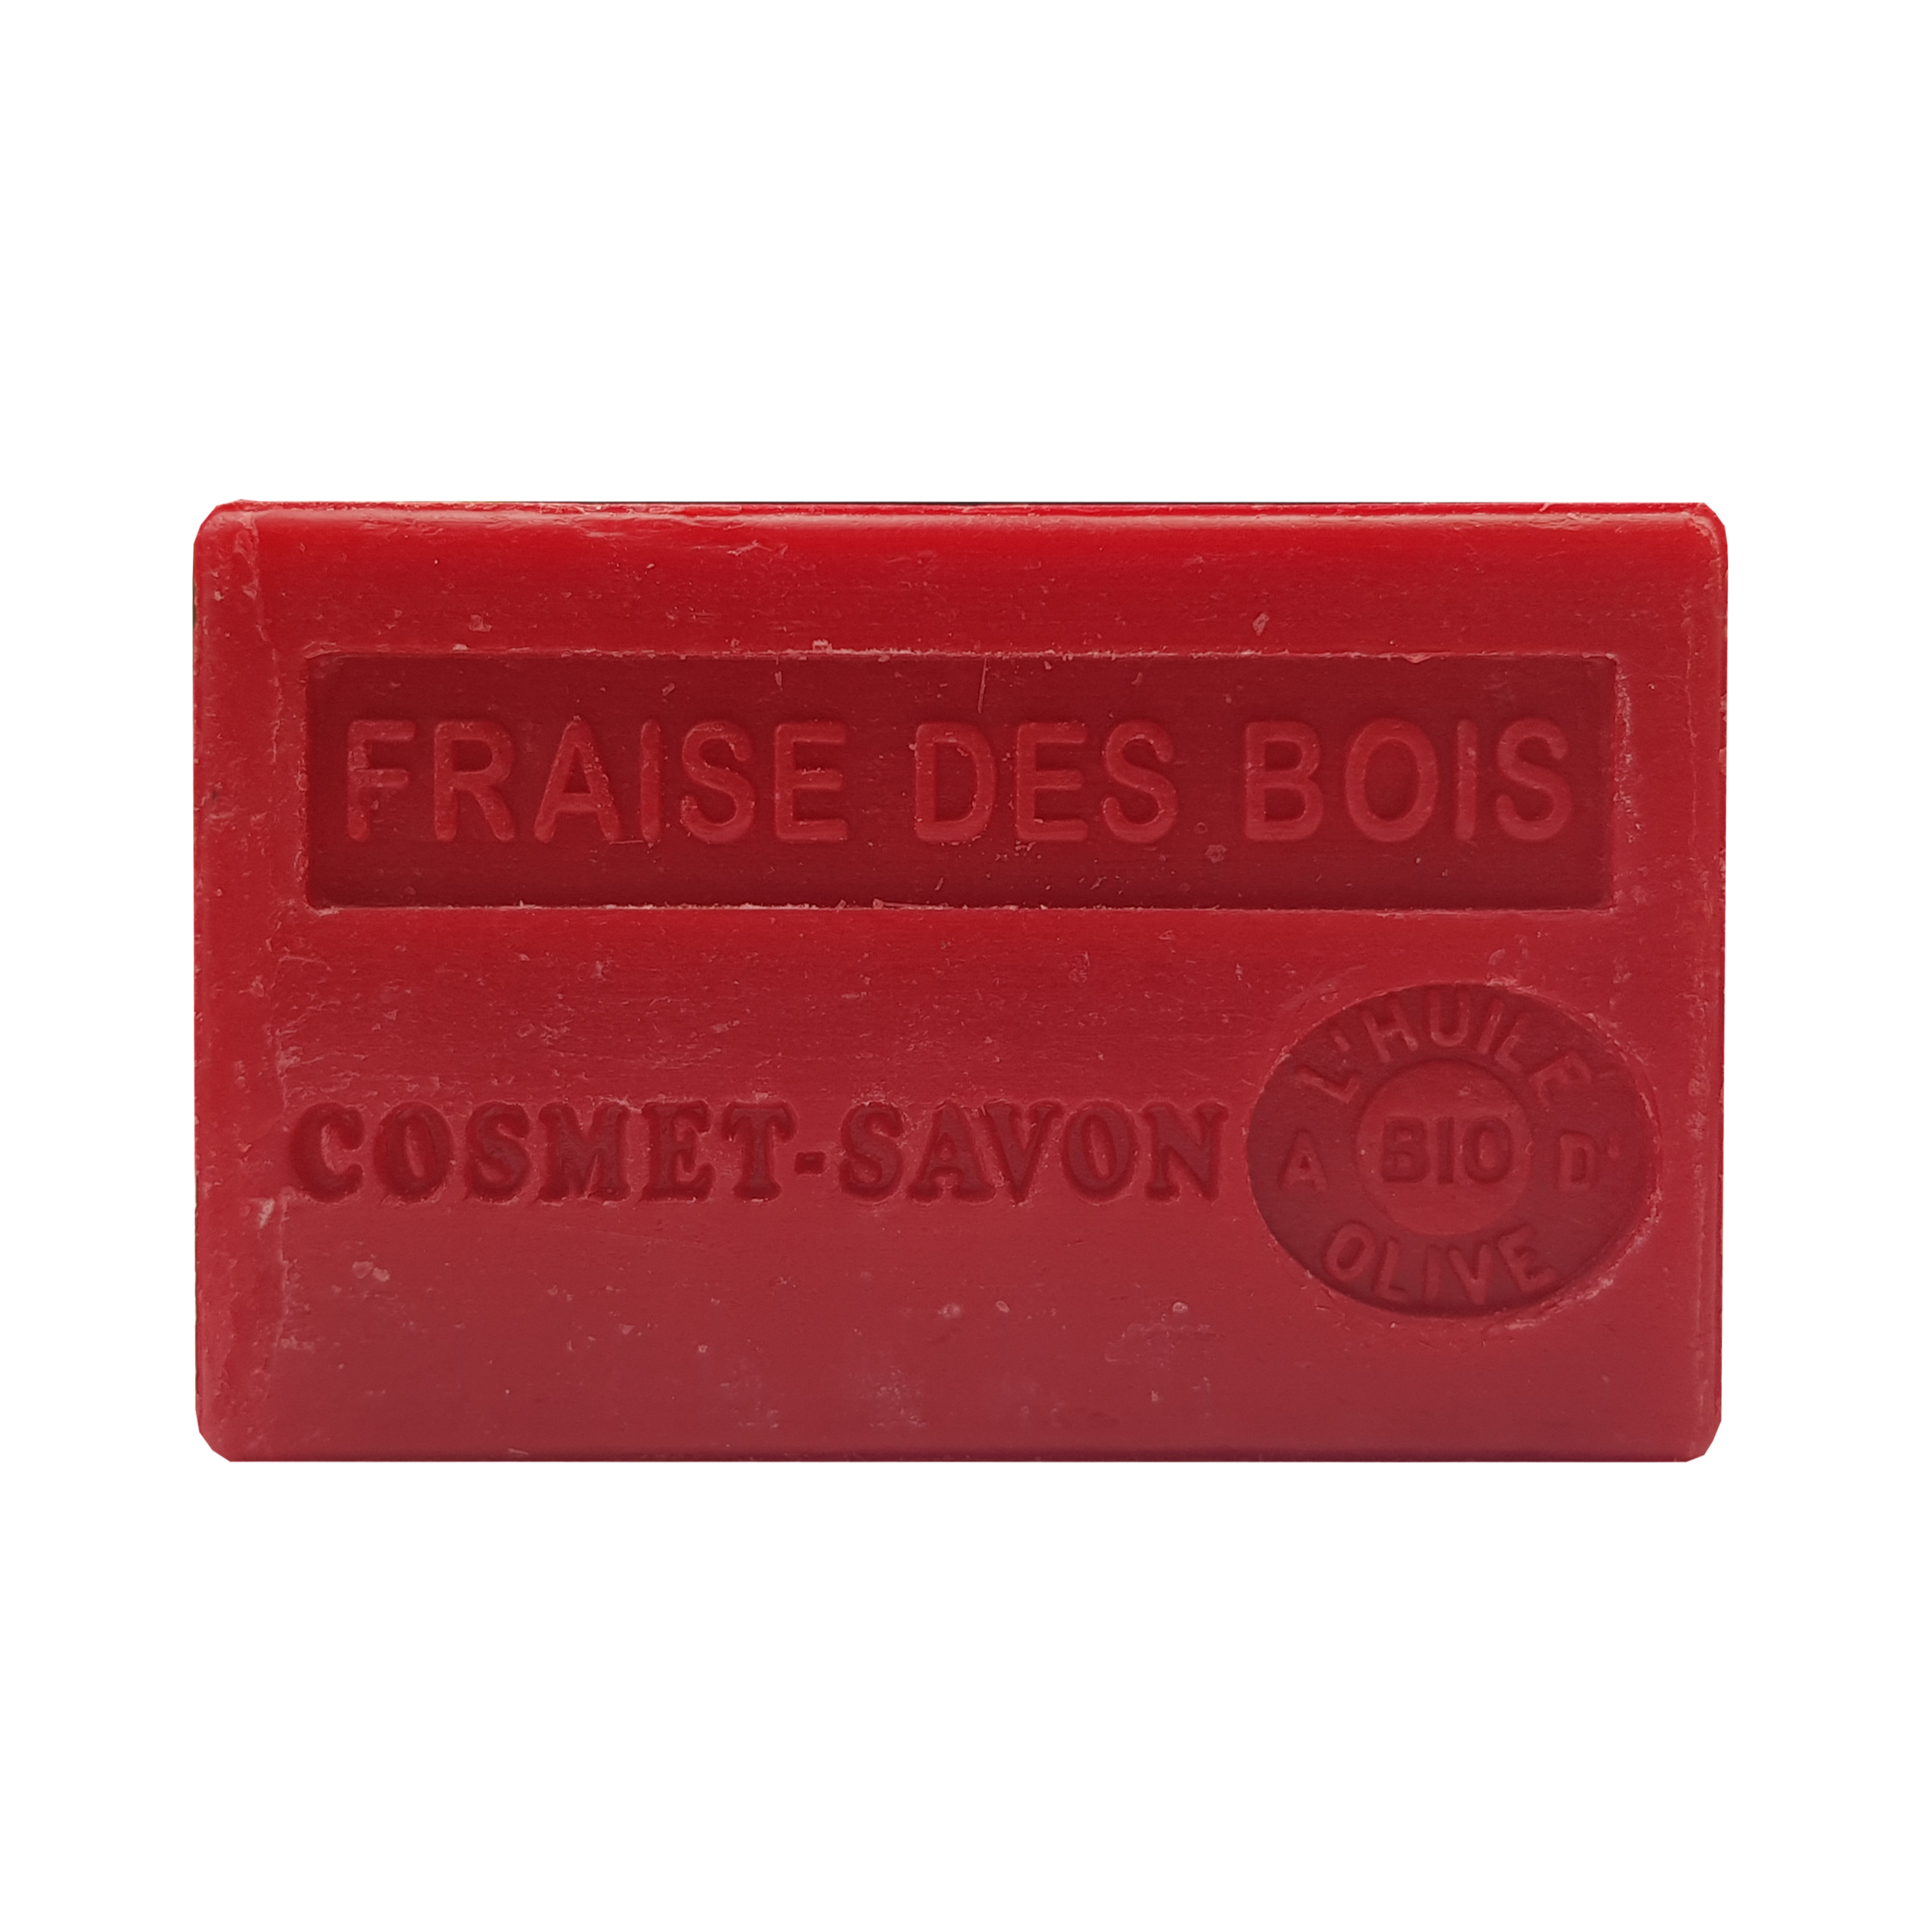 fraise-des-bois-savon-125gr-au-beurre-de-karite-bio-cosmet-savon-3665205006324-face-JPEG